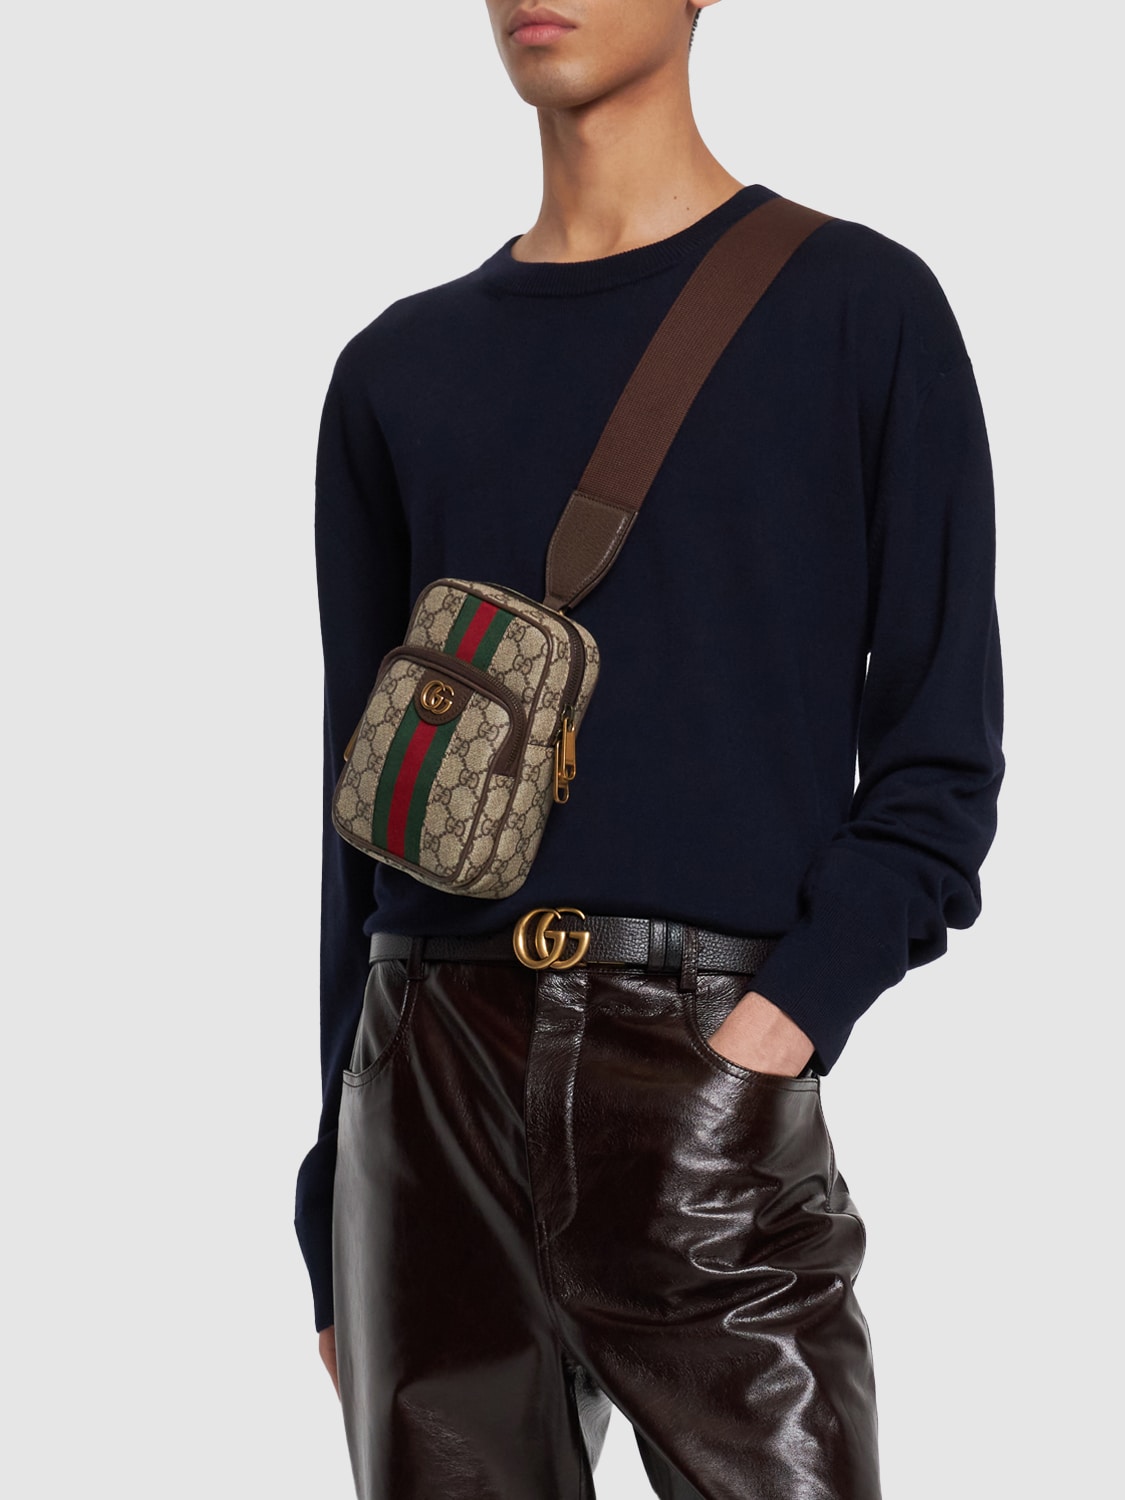 Gucci Gg Supreme Crossbody Bag In Beige,ebony